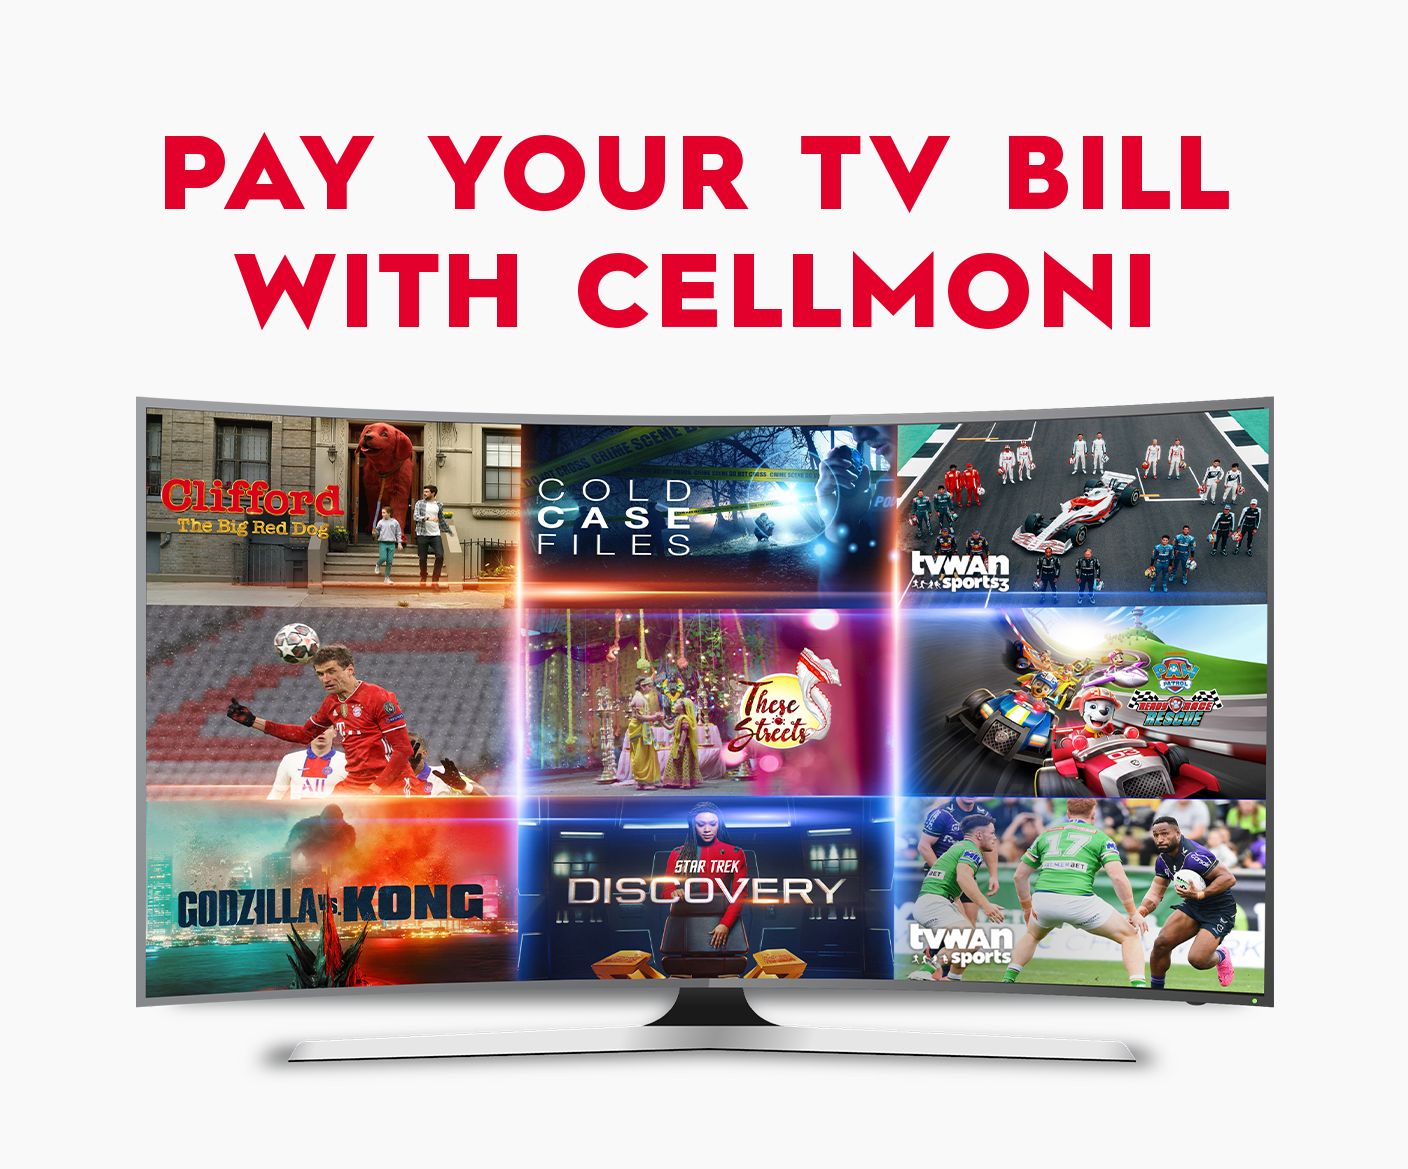 tv bill with cellmoni